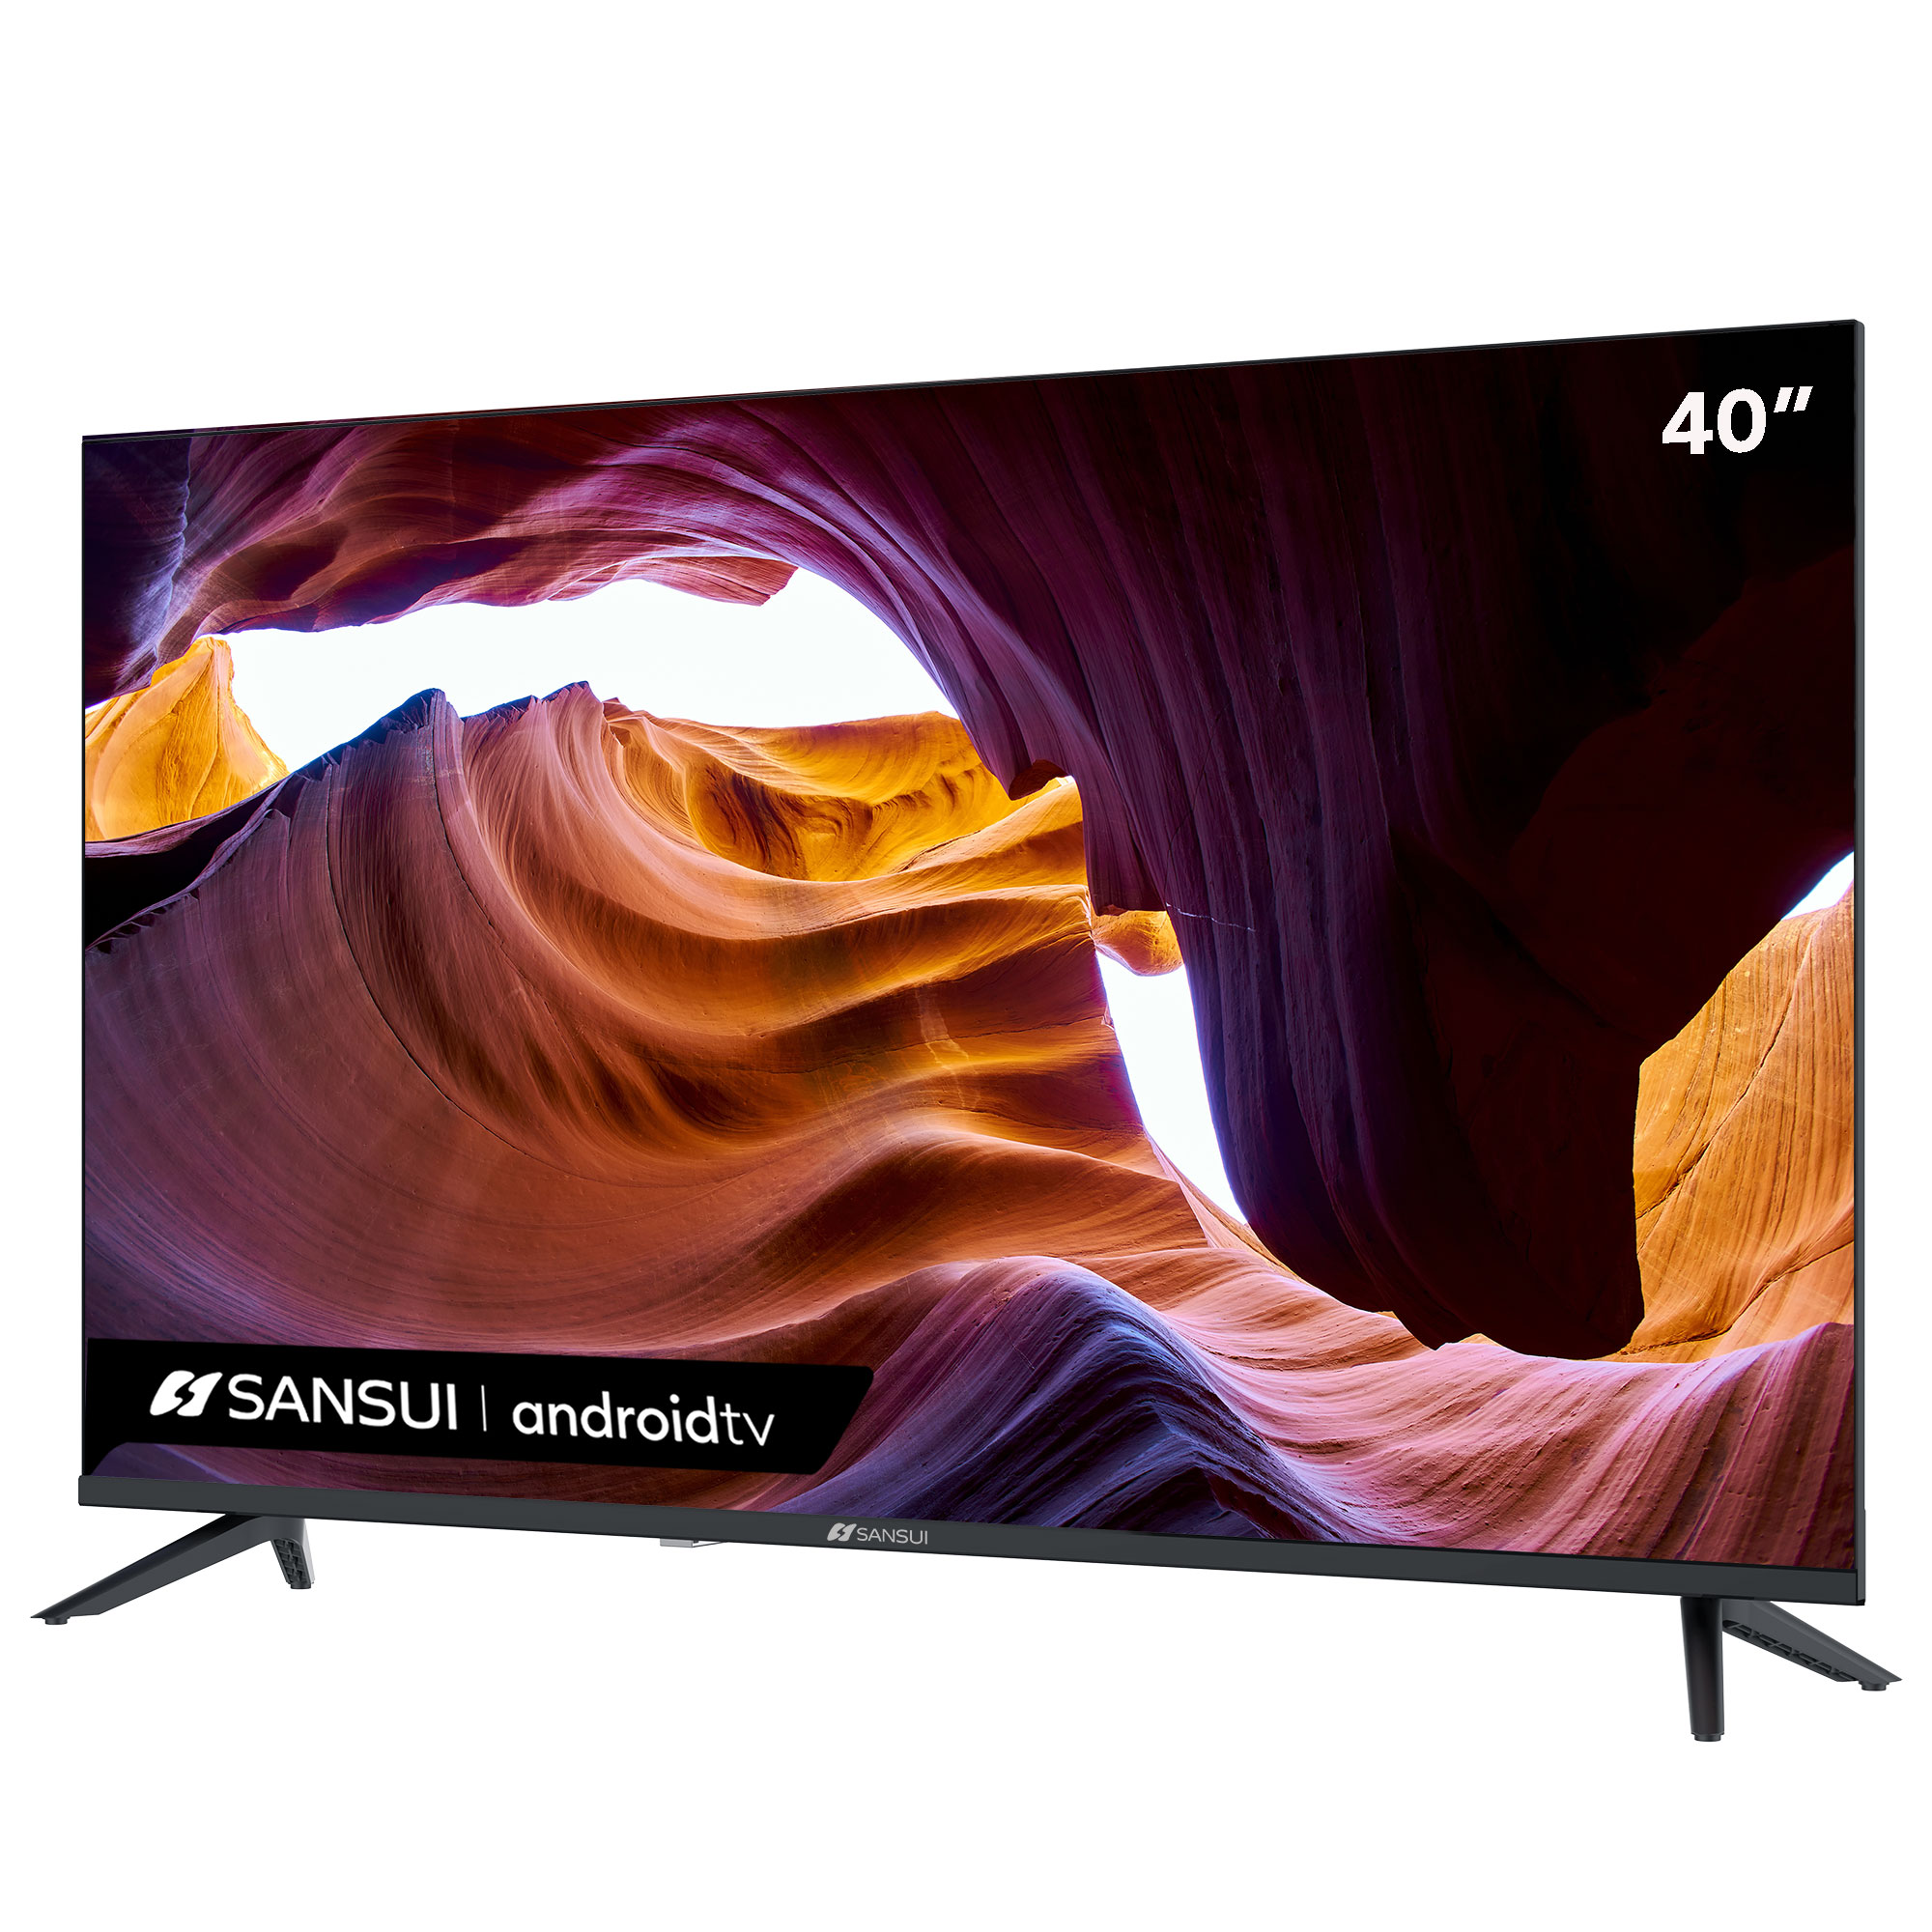 Pantalla SANSUI 40" Android TV Smart, Full HD, SMX40V1FA